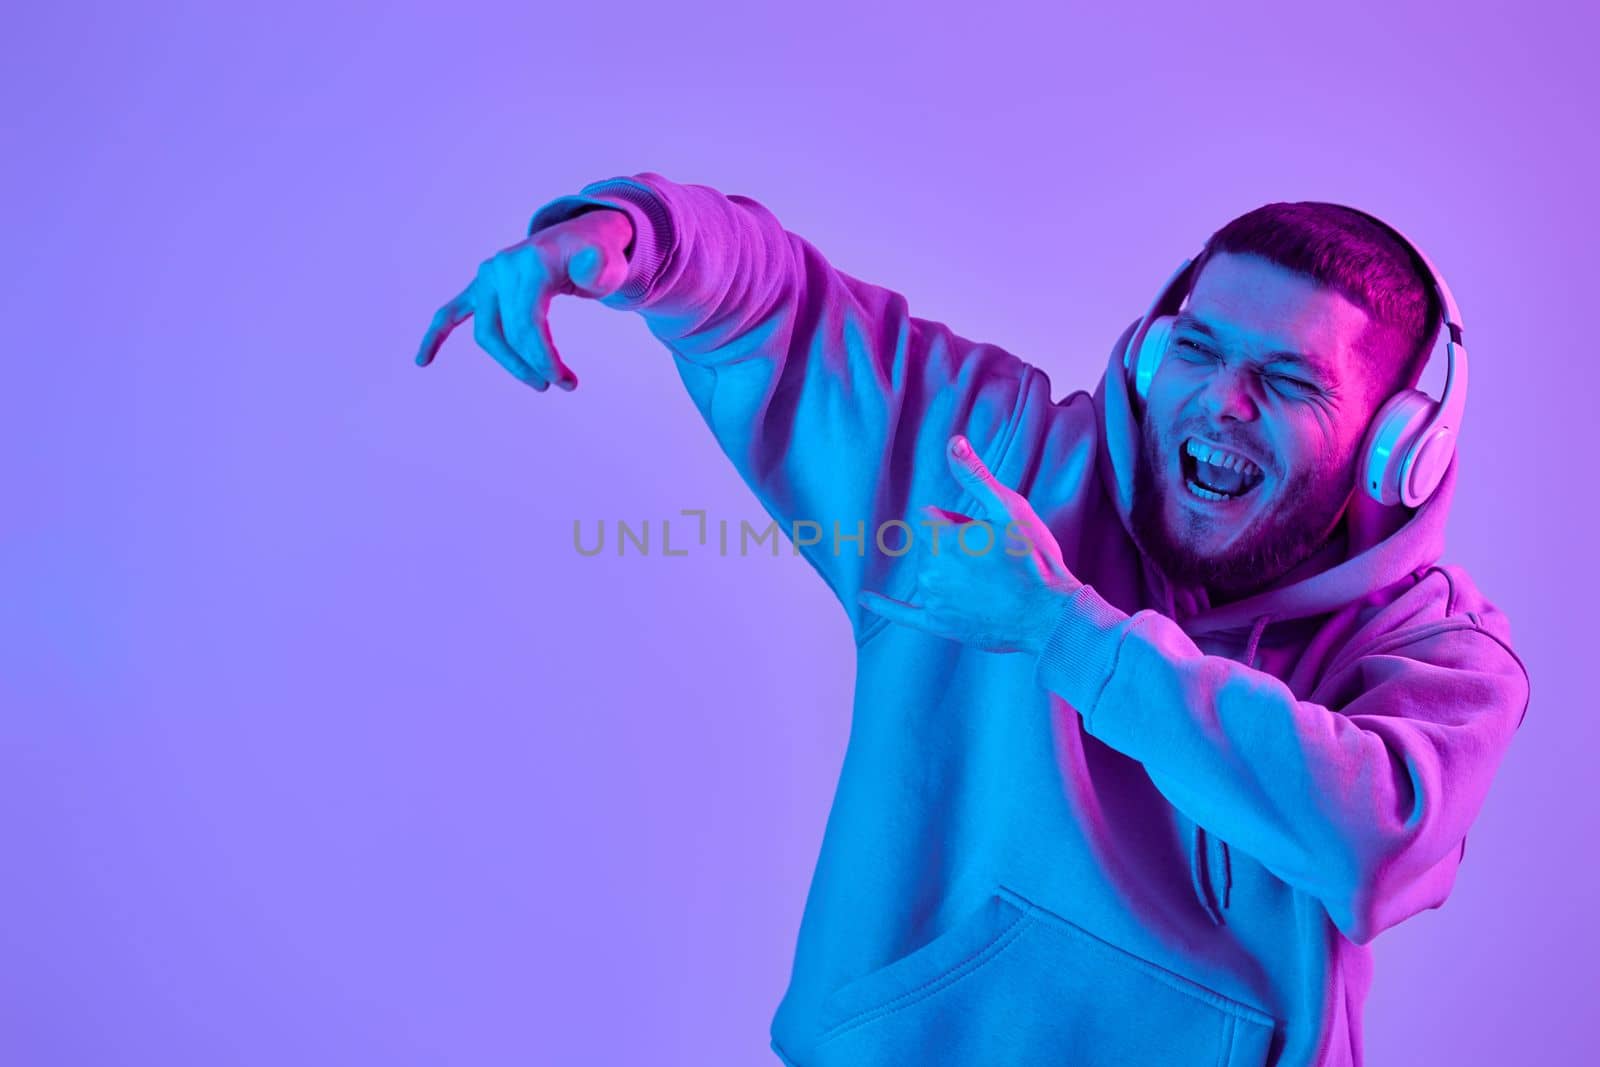 handsome bearded man with headphones in sweatshirt enjoying favorite music on purple neon background. Neon lighting